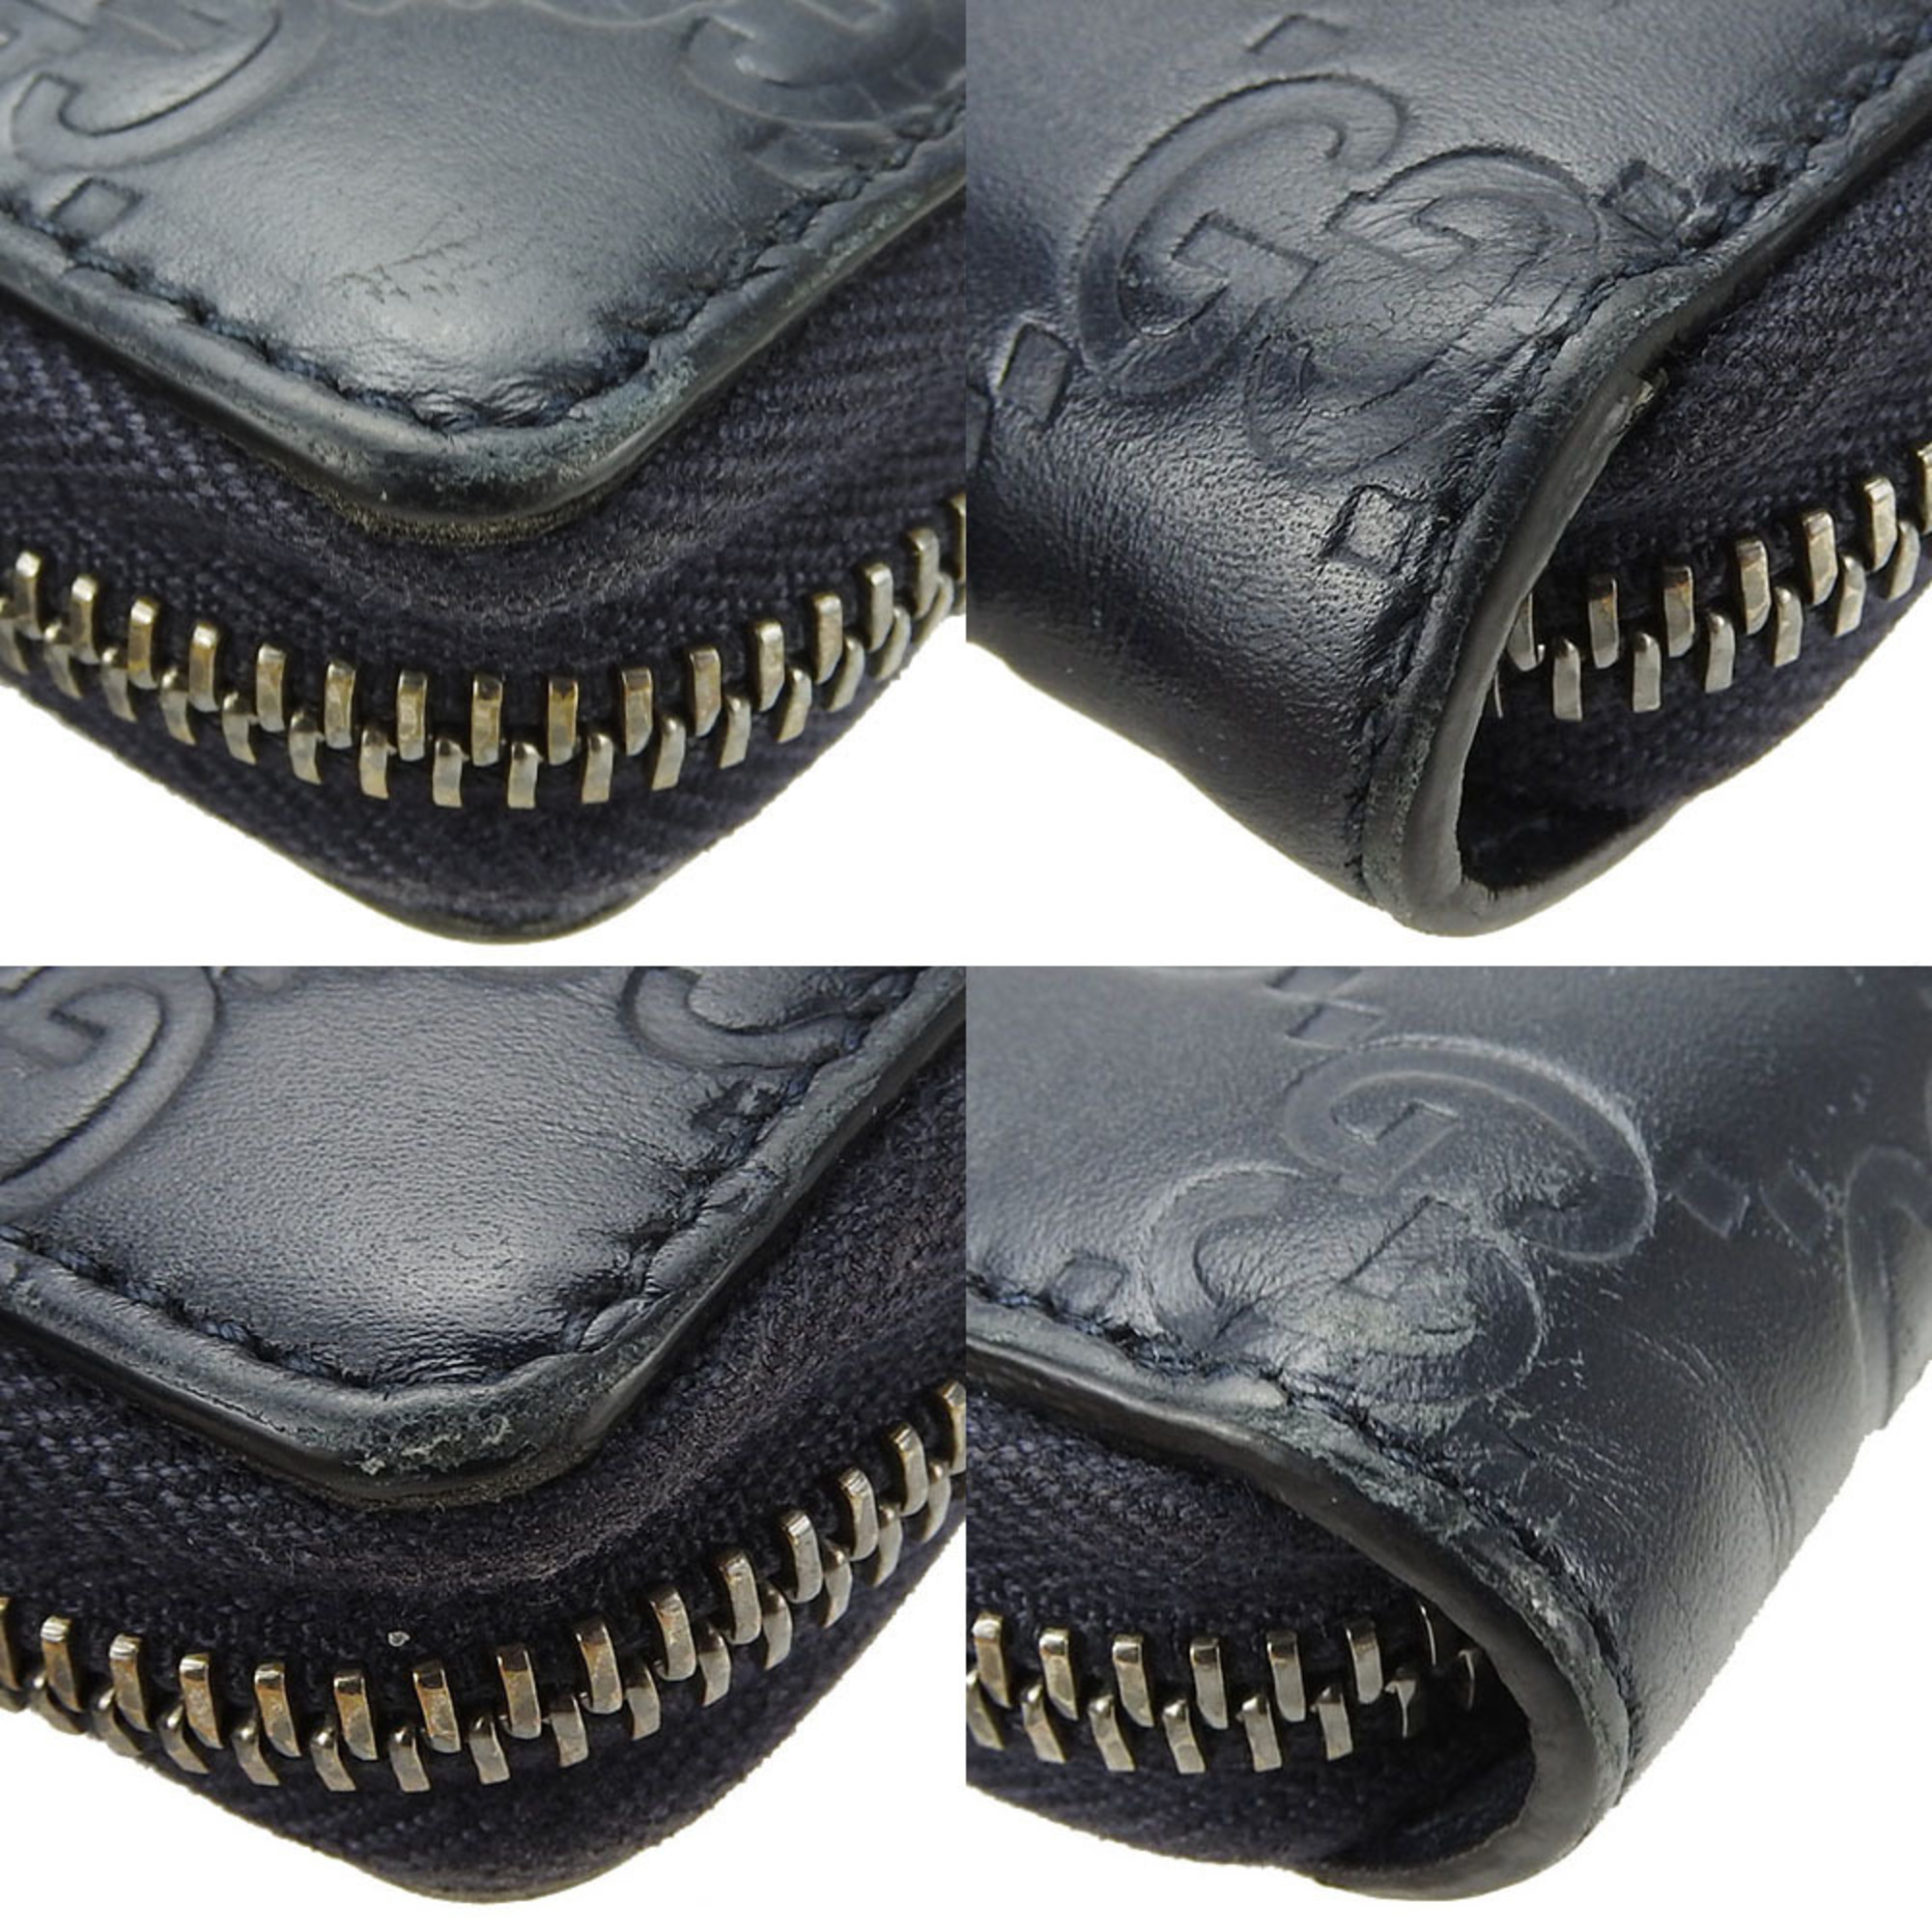 Gucci Round Long Wallet 307987 Guccisima GG Navy Leather Chic Accessories Women's Men's GUCCI Zip Around navy